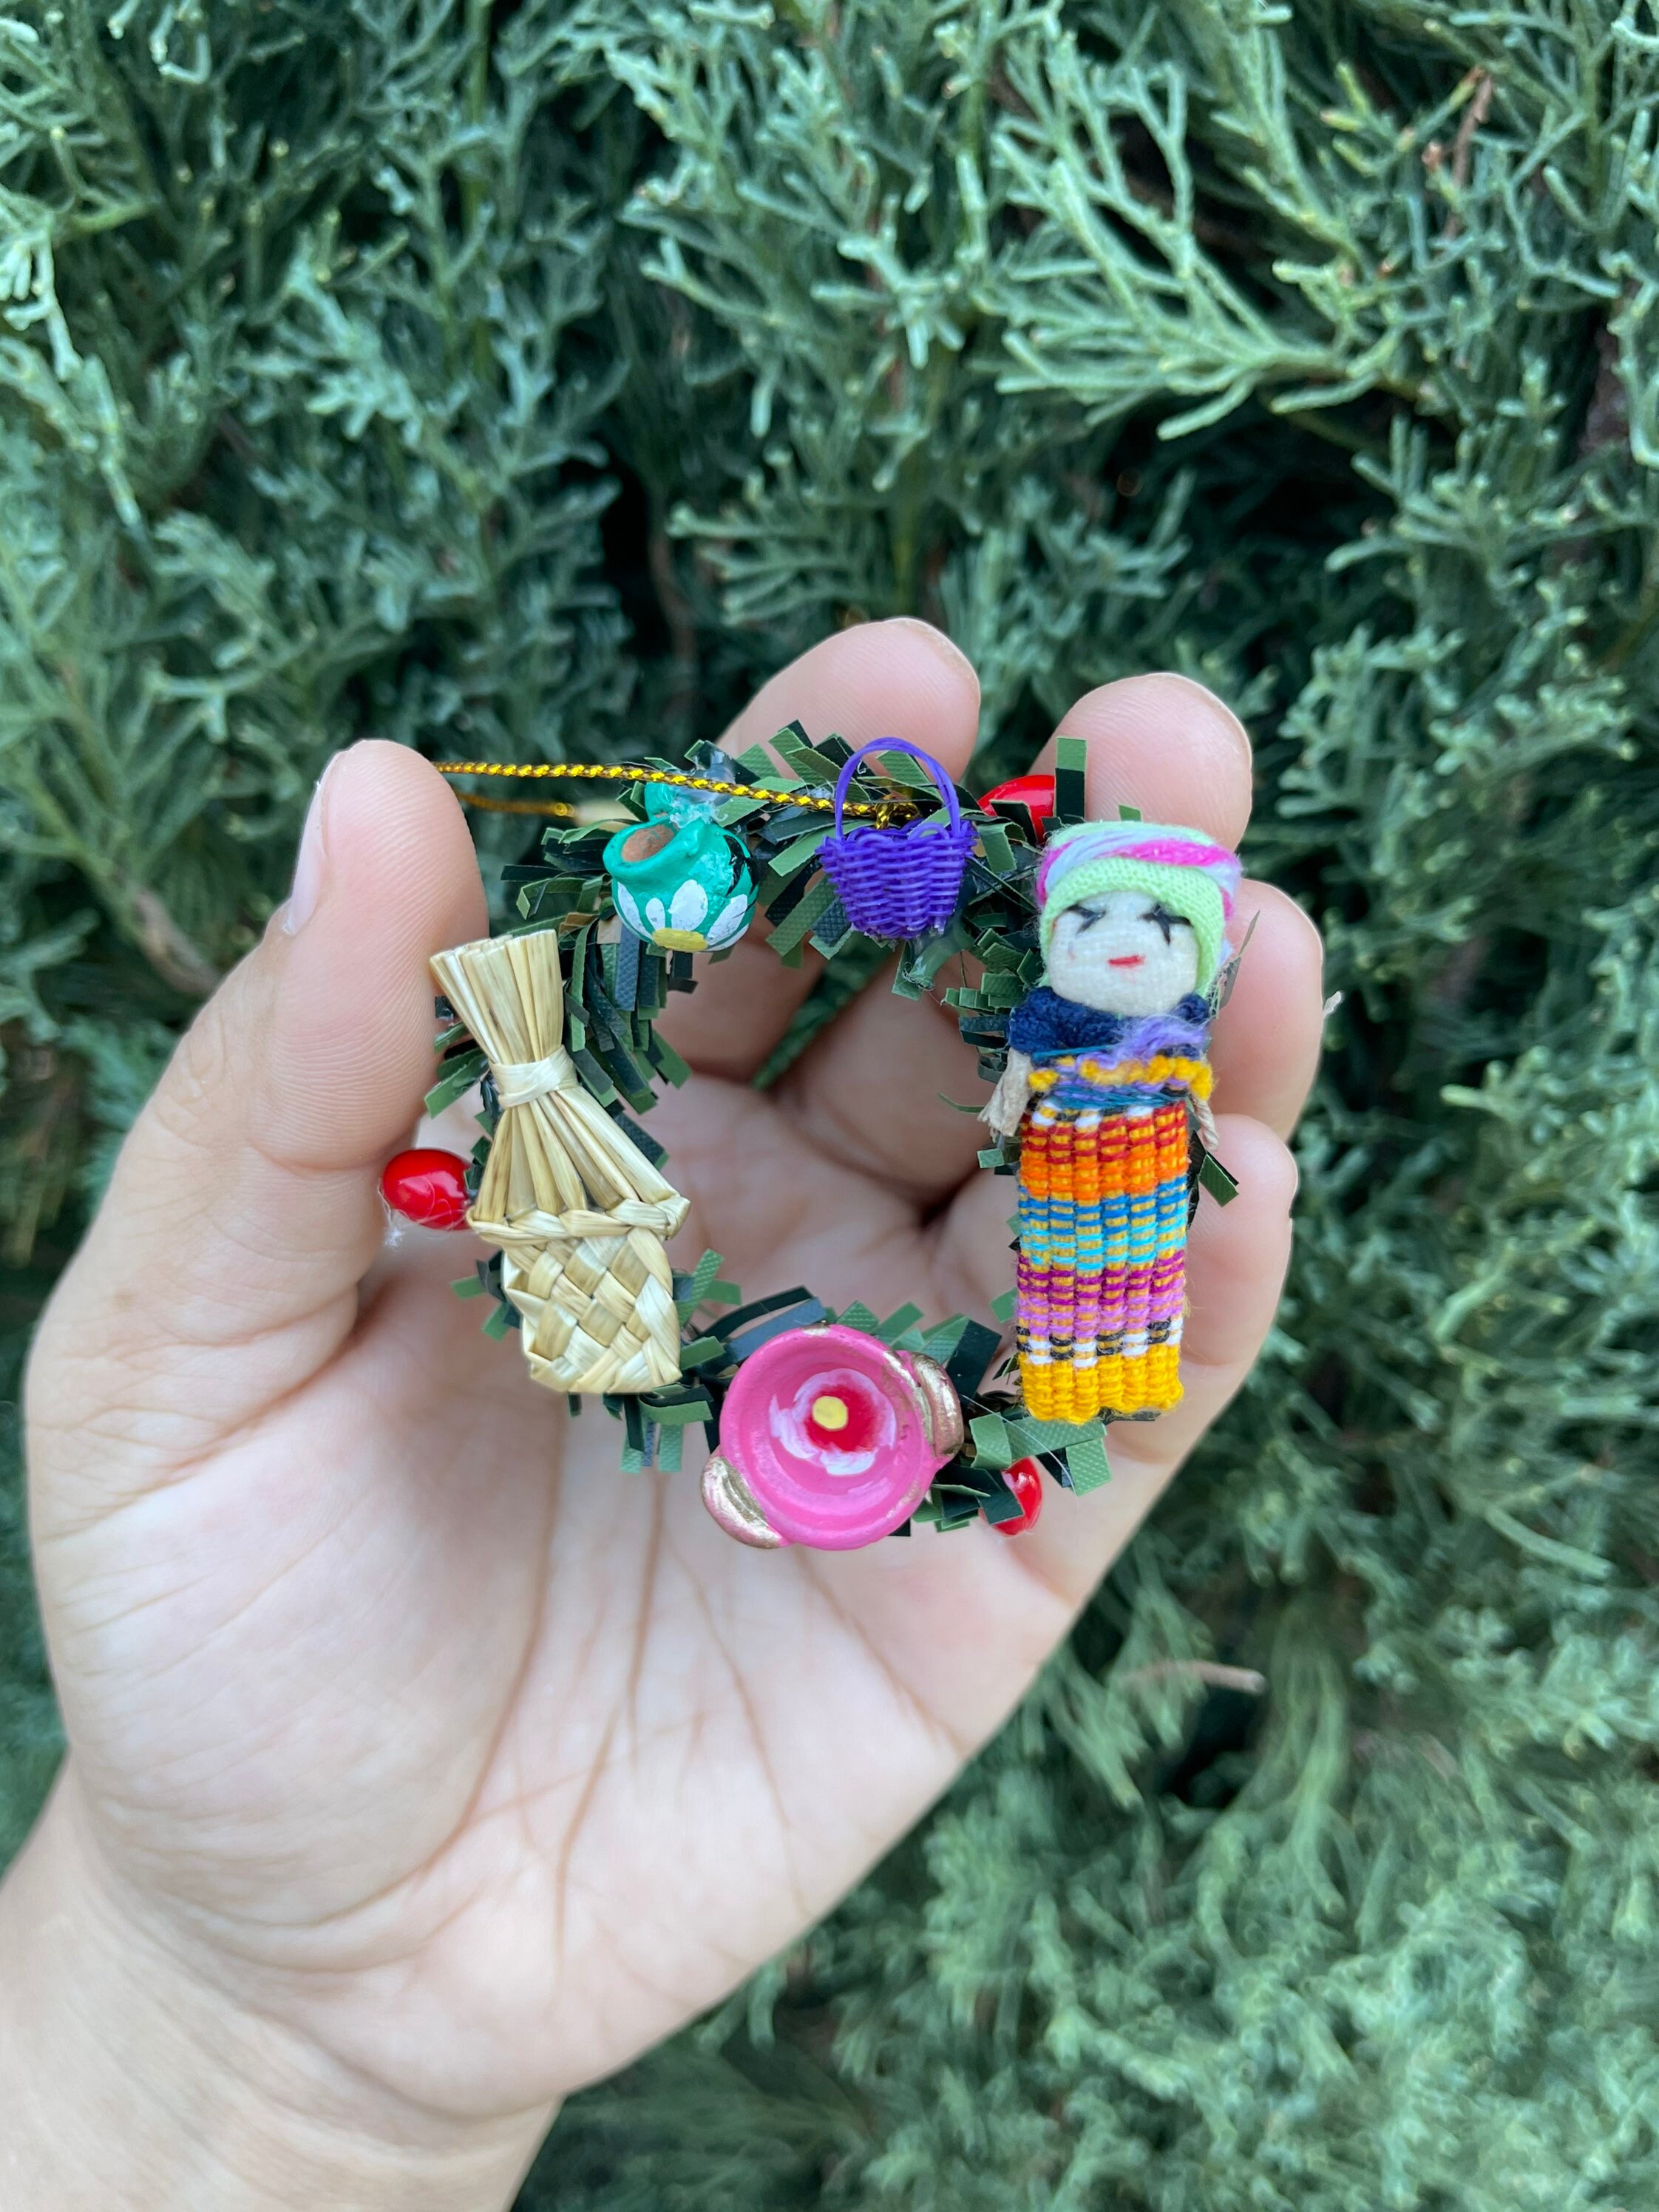 Mini Wreath Mexican Ornaments Hand Made Miniature Ornaments La